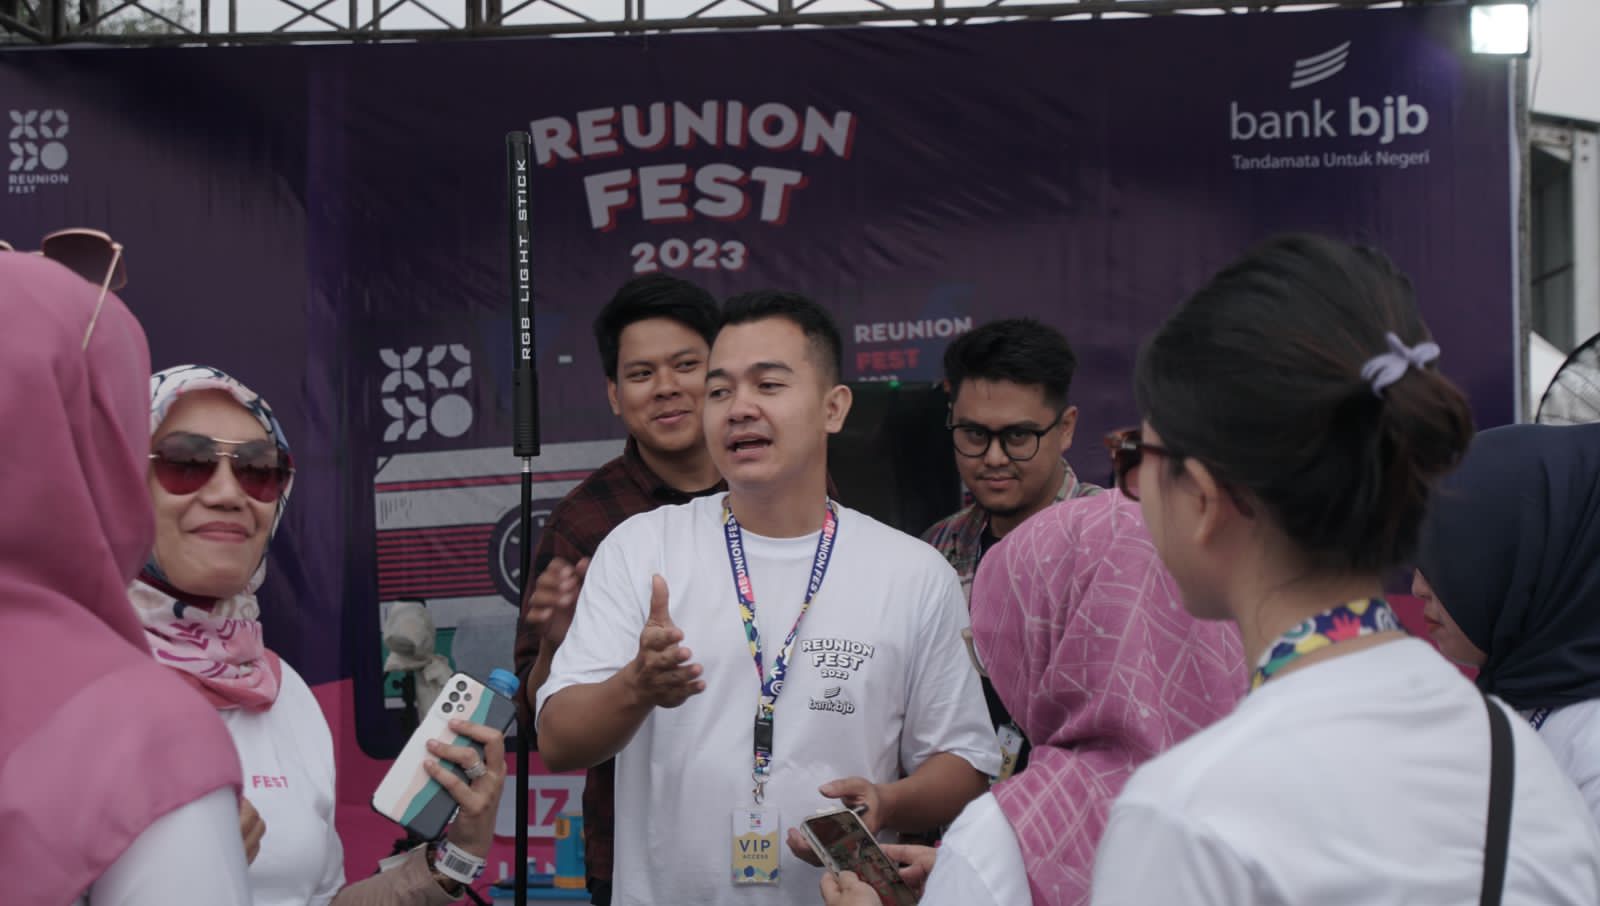 Reunion Fest 2023 SMANSA Subang Berlangsung Meriah